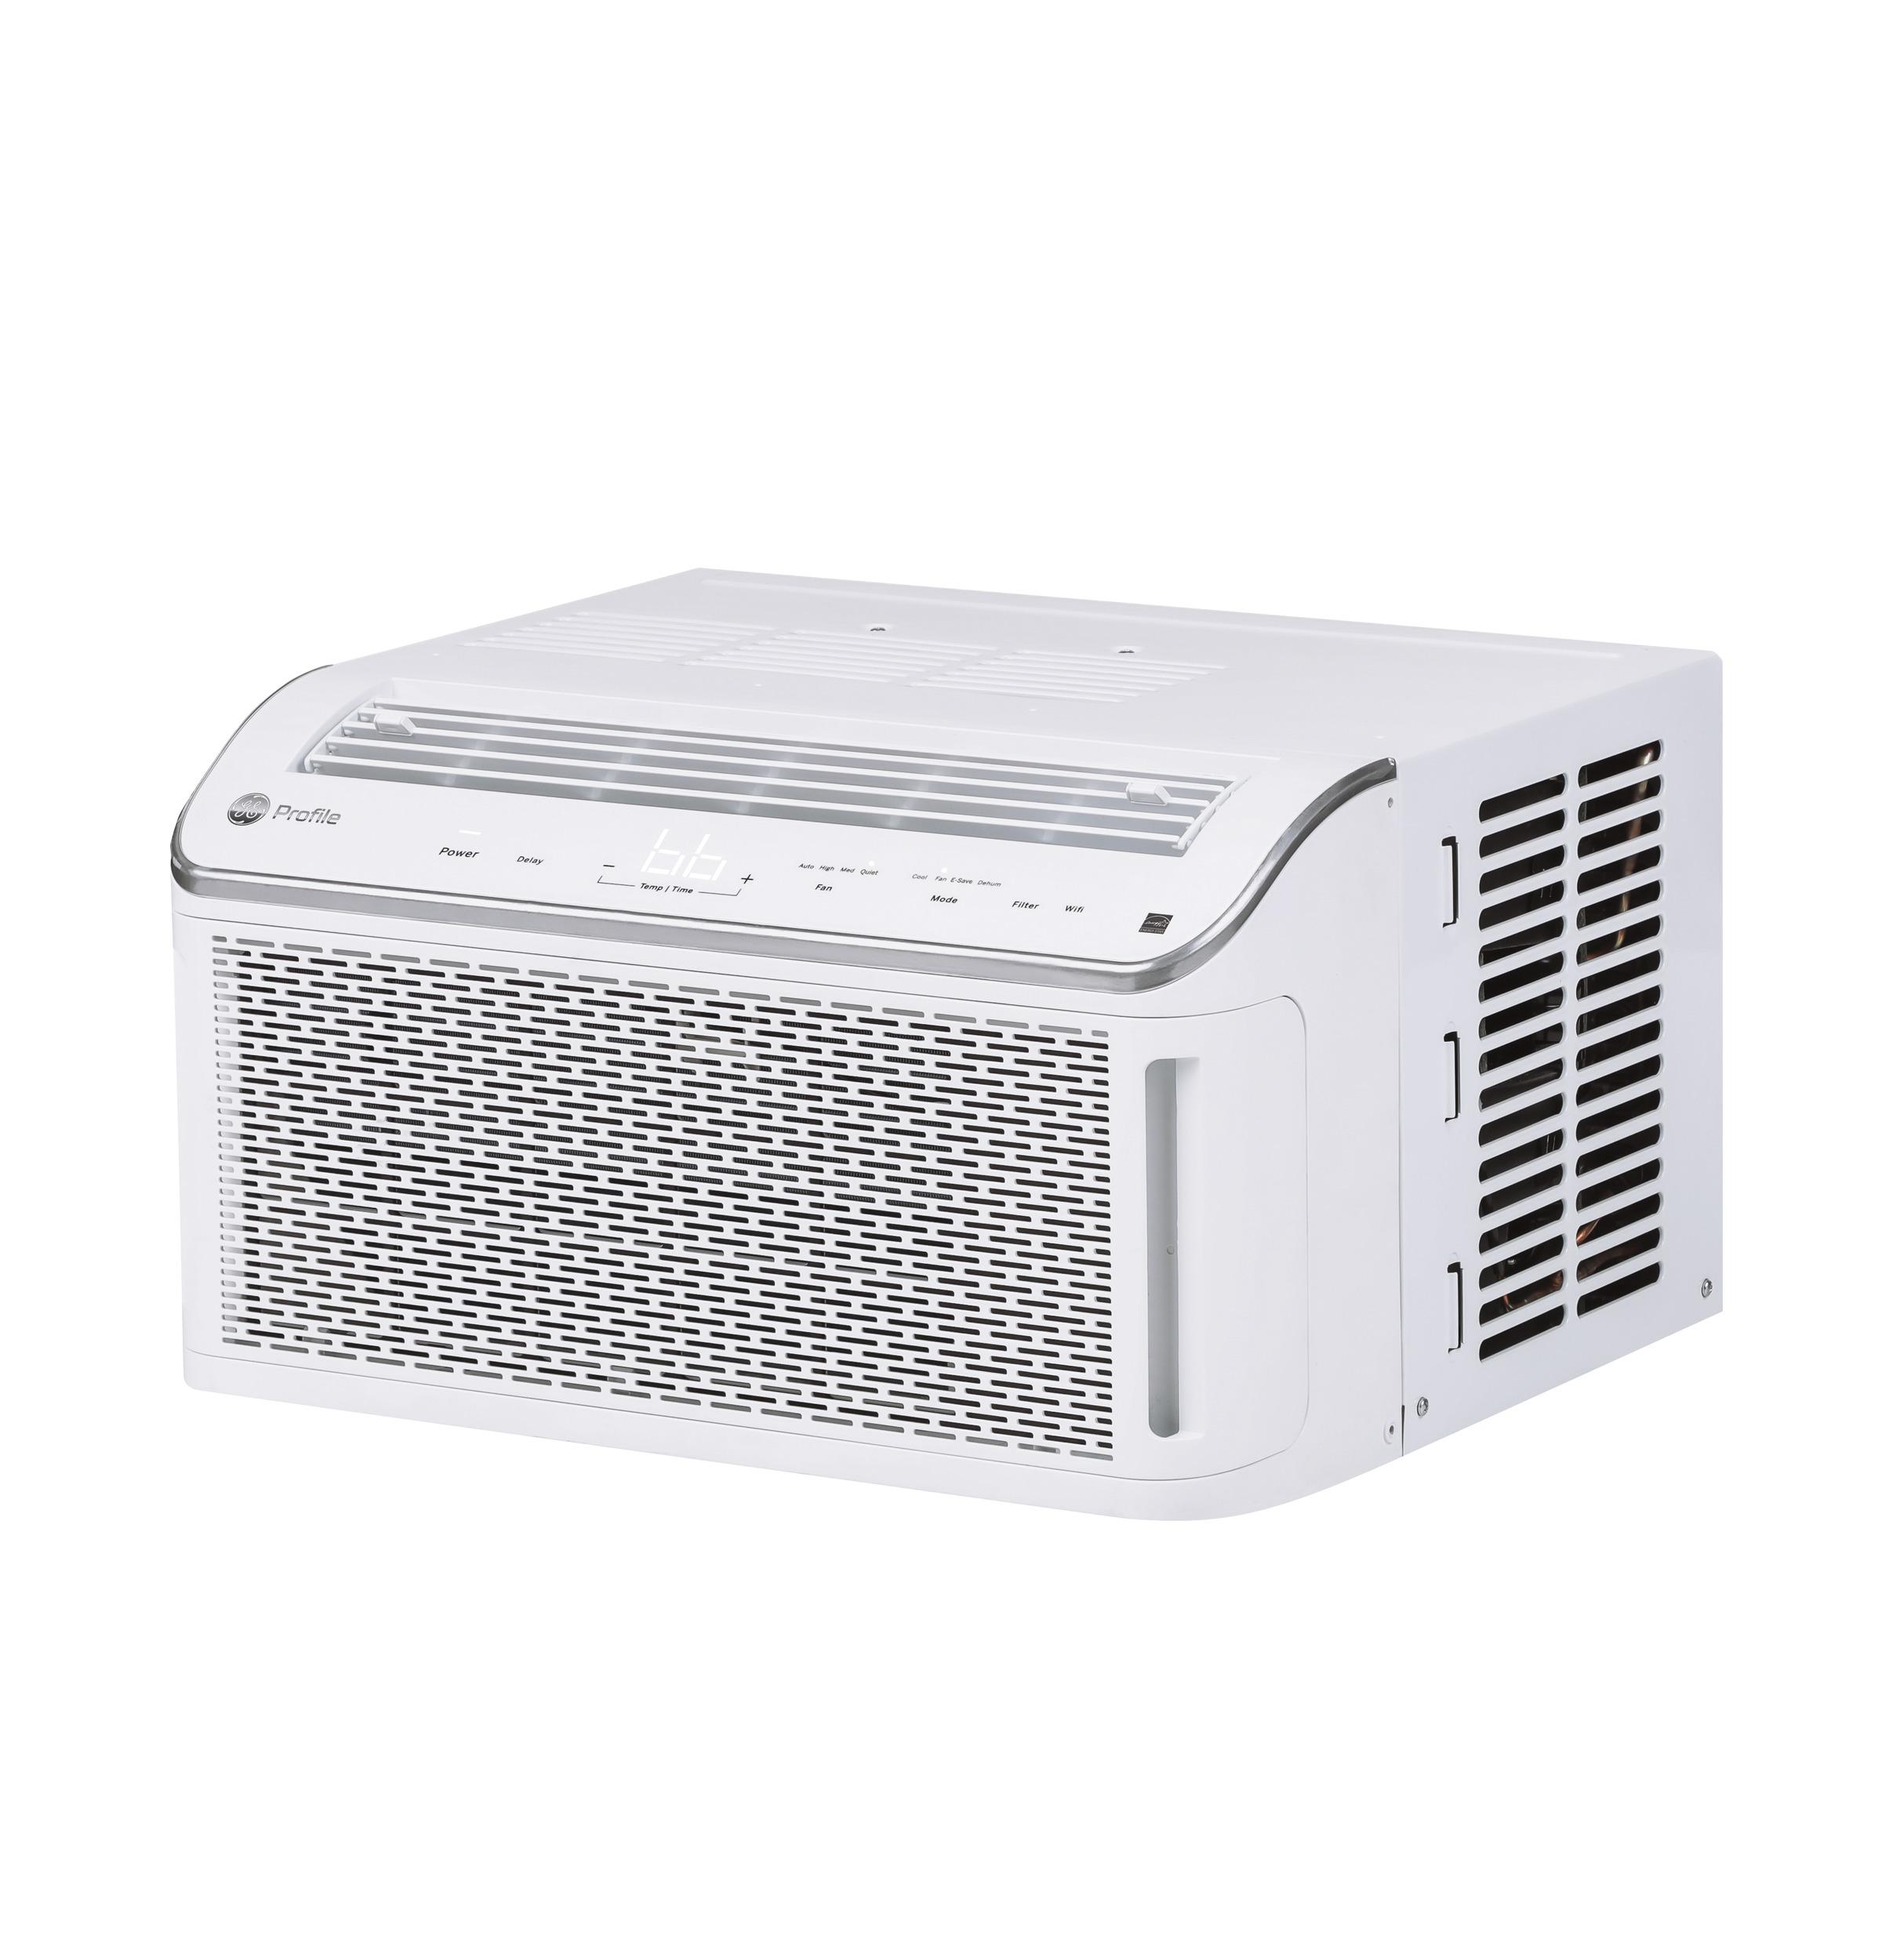 GE - 150 Sq ft 8,000 BTU Portable Air Conditioner - White